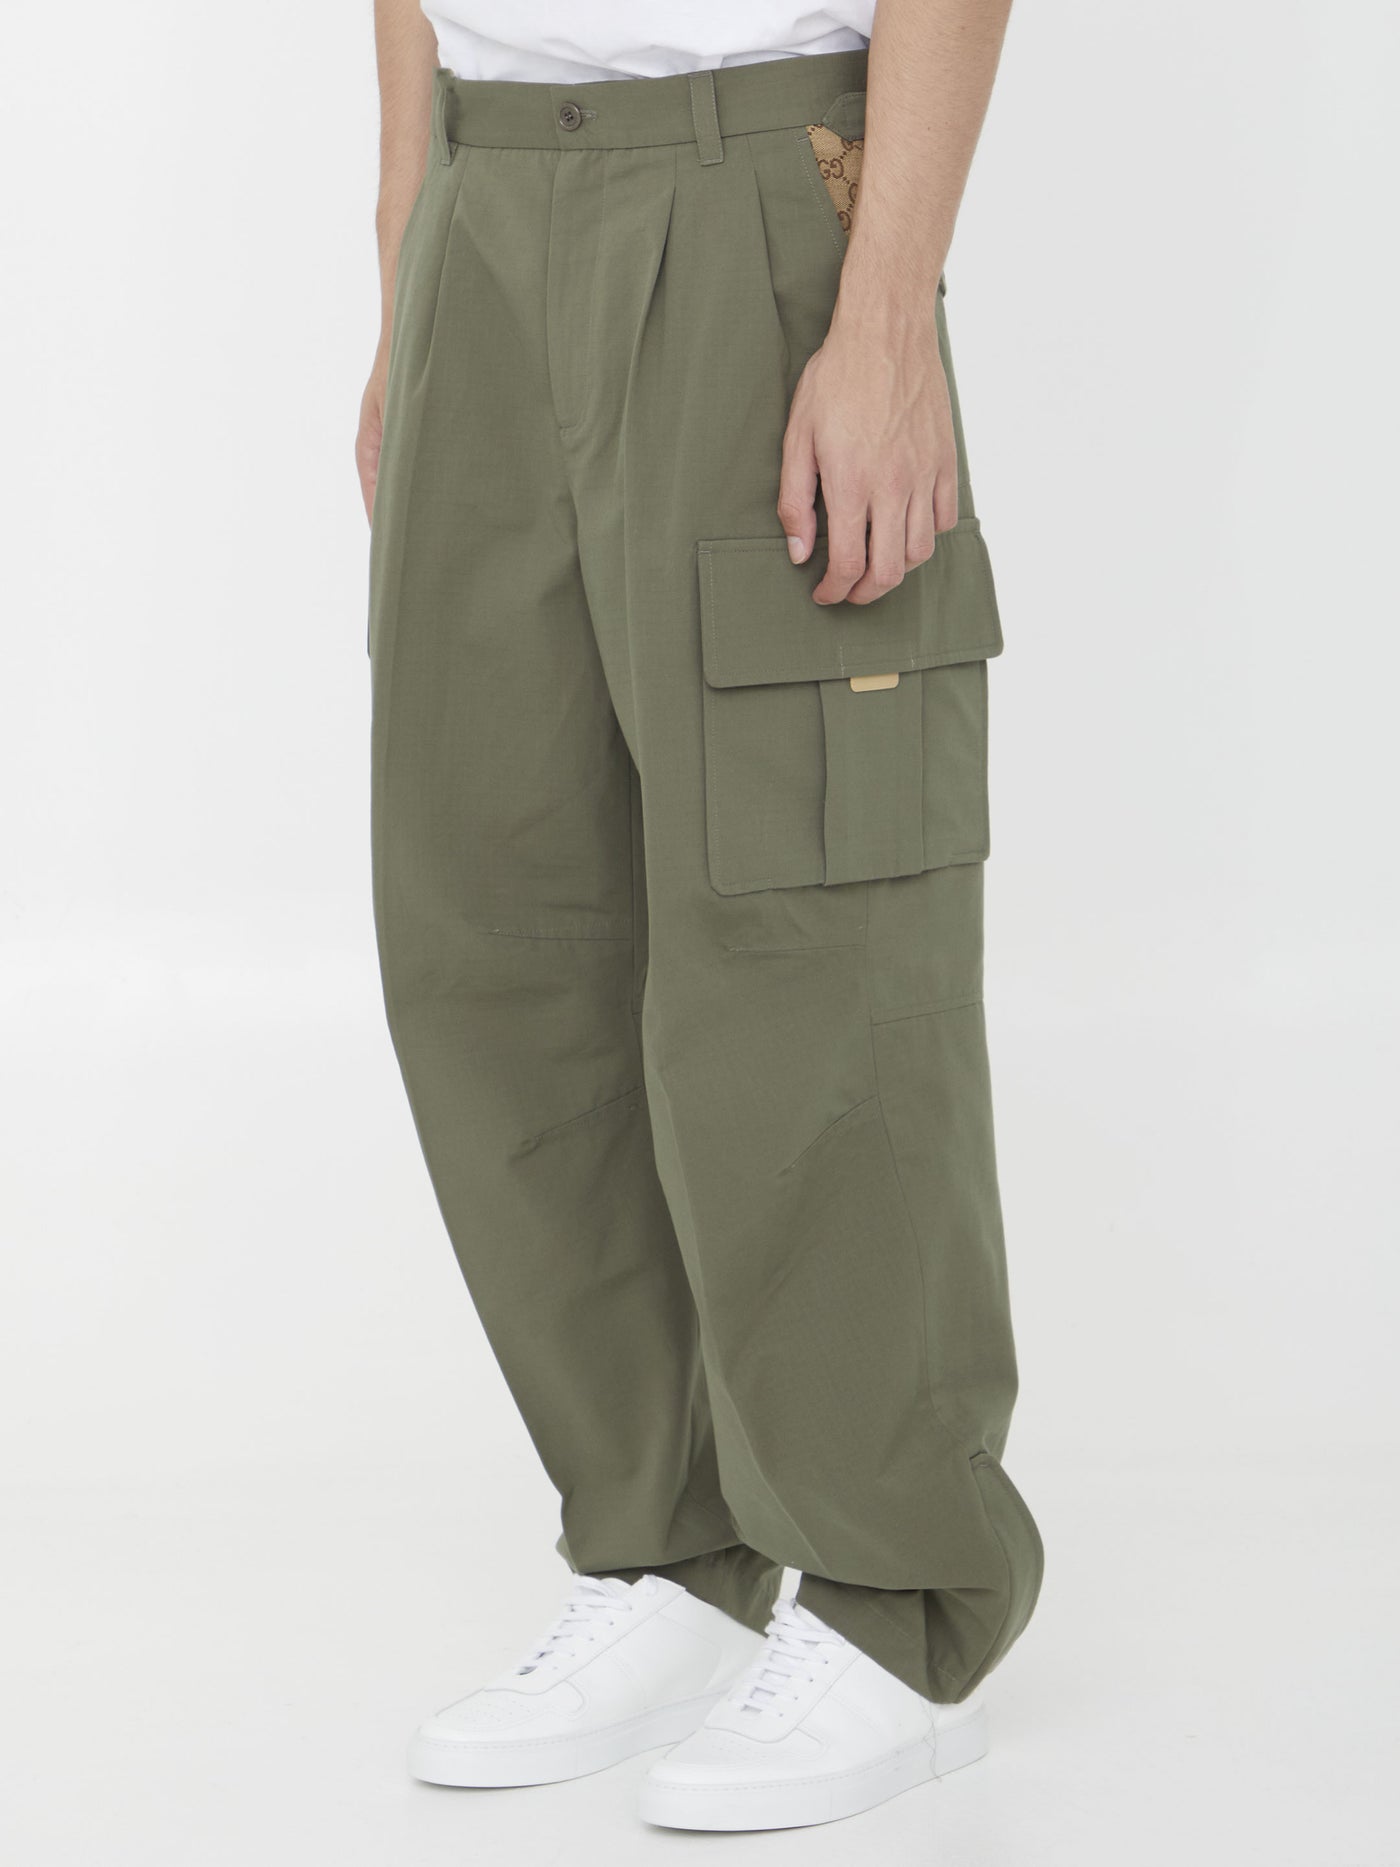 gucci pants khaki green cargo trousers military boys s.6 cotton